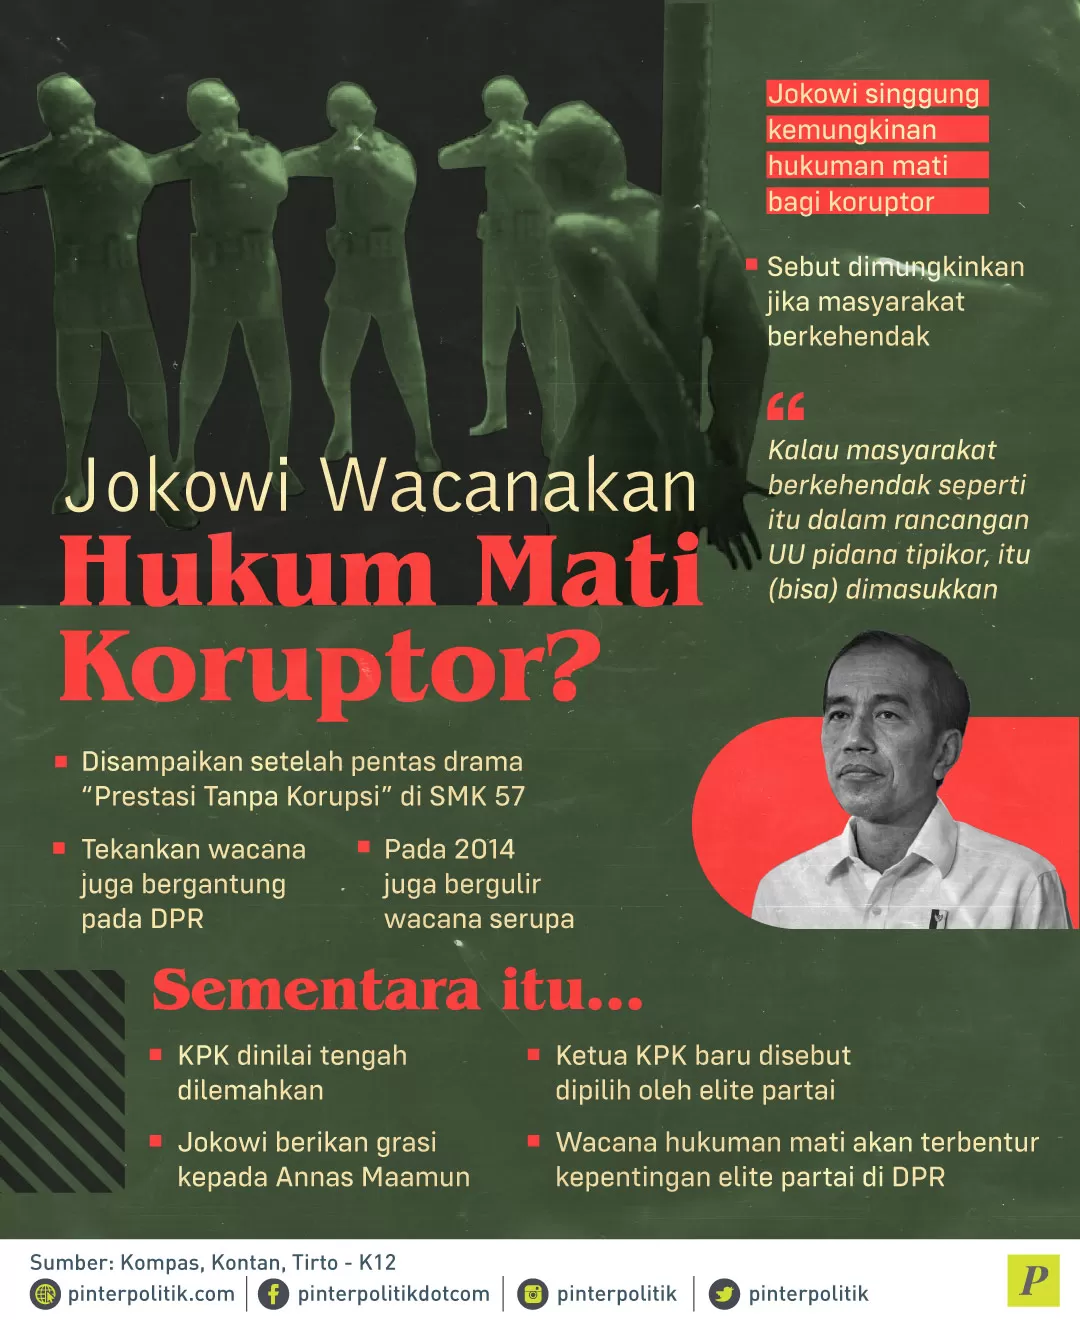 Jokowi Wacanakan Hukum Mati Koruptor